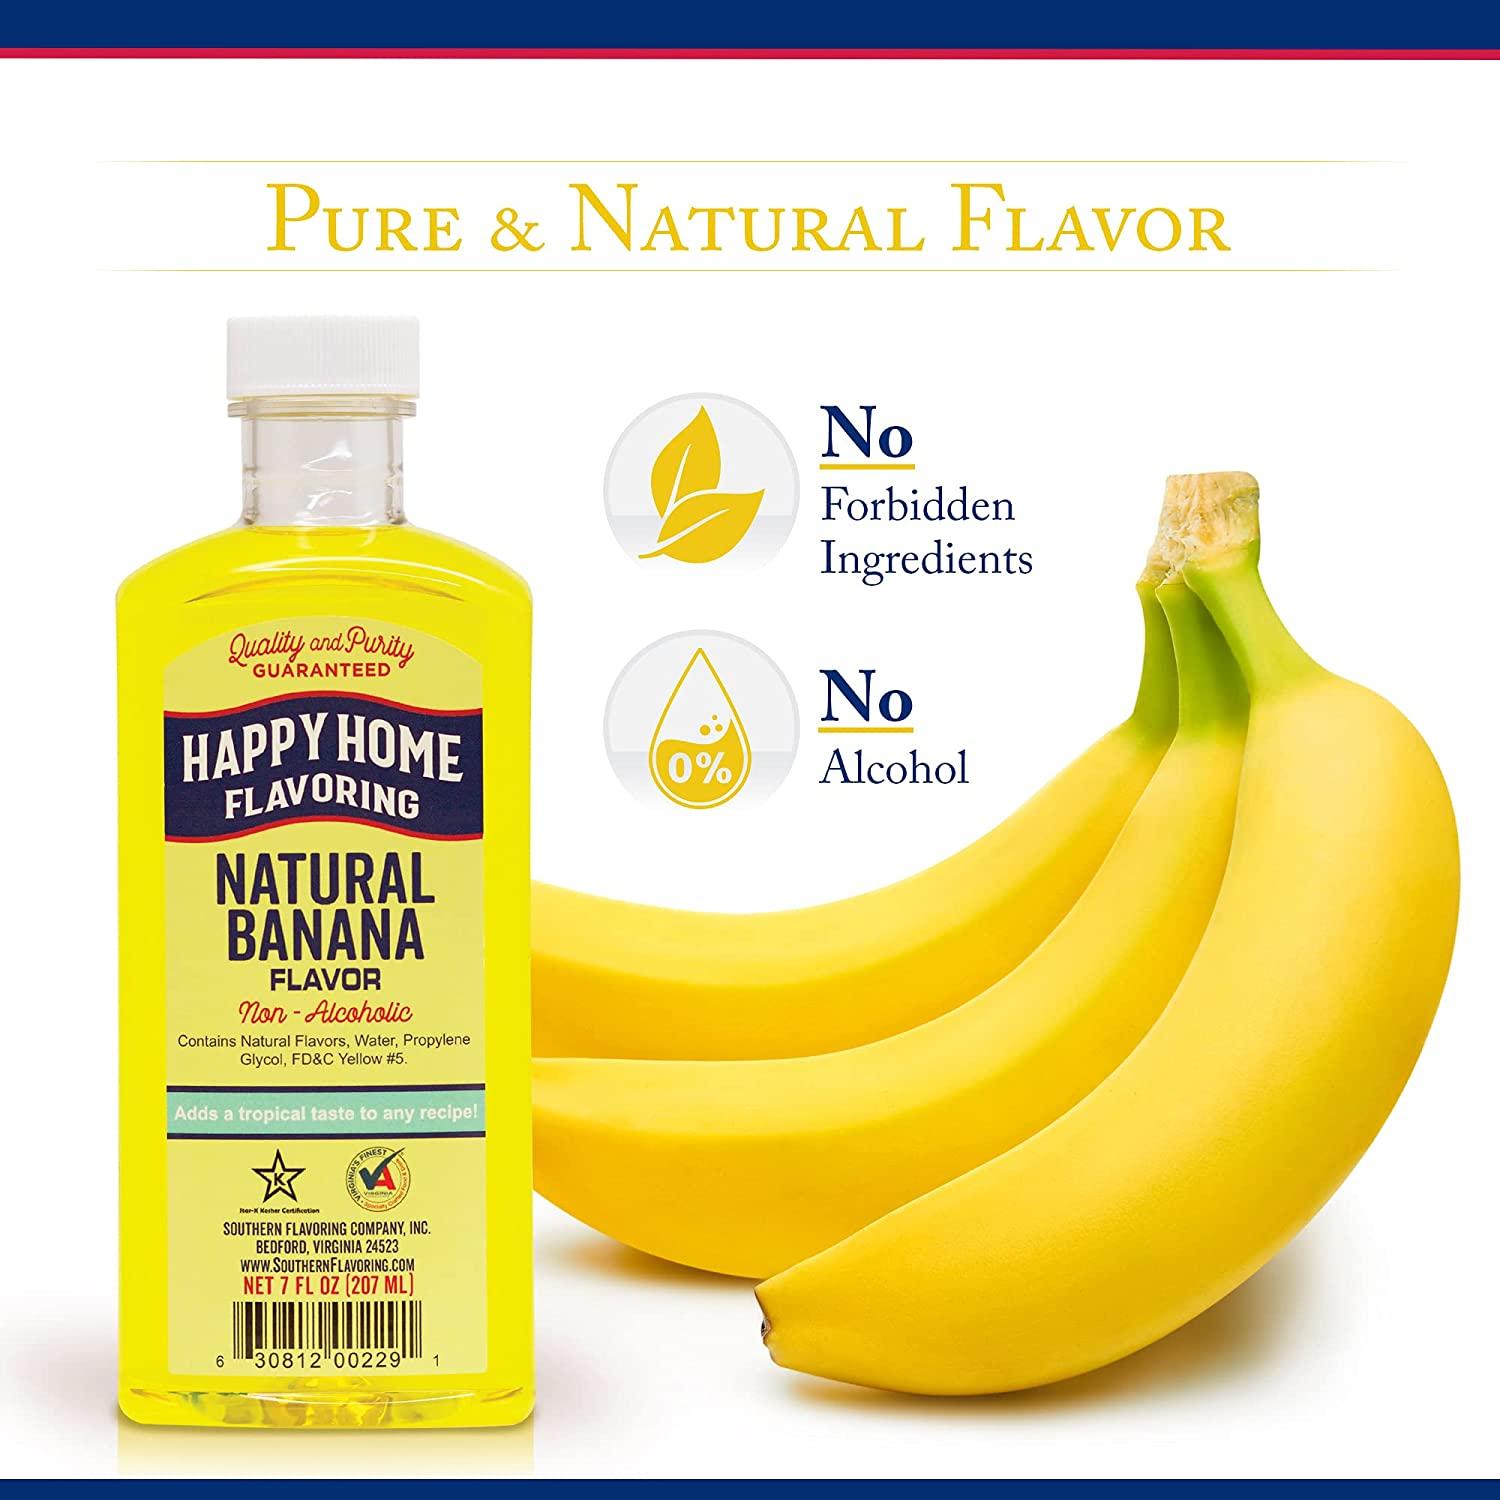 Happy Home Natural Banana Flavoring, Non-alcoholic, Certified Kosher, 7oz.